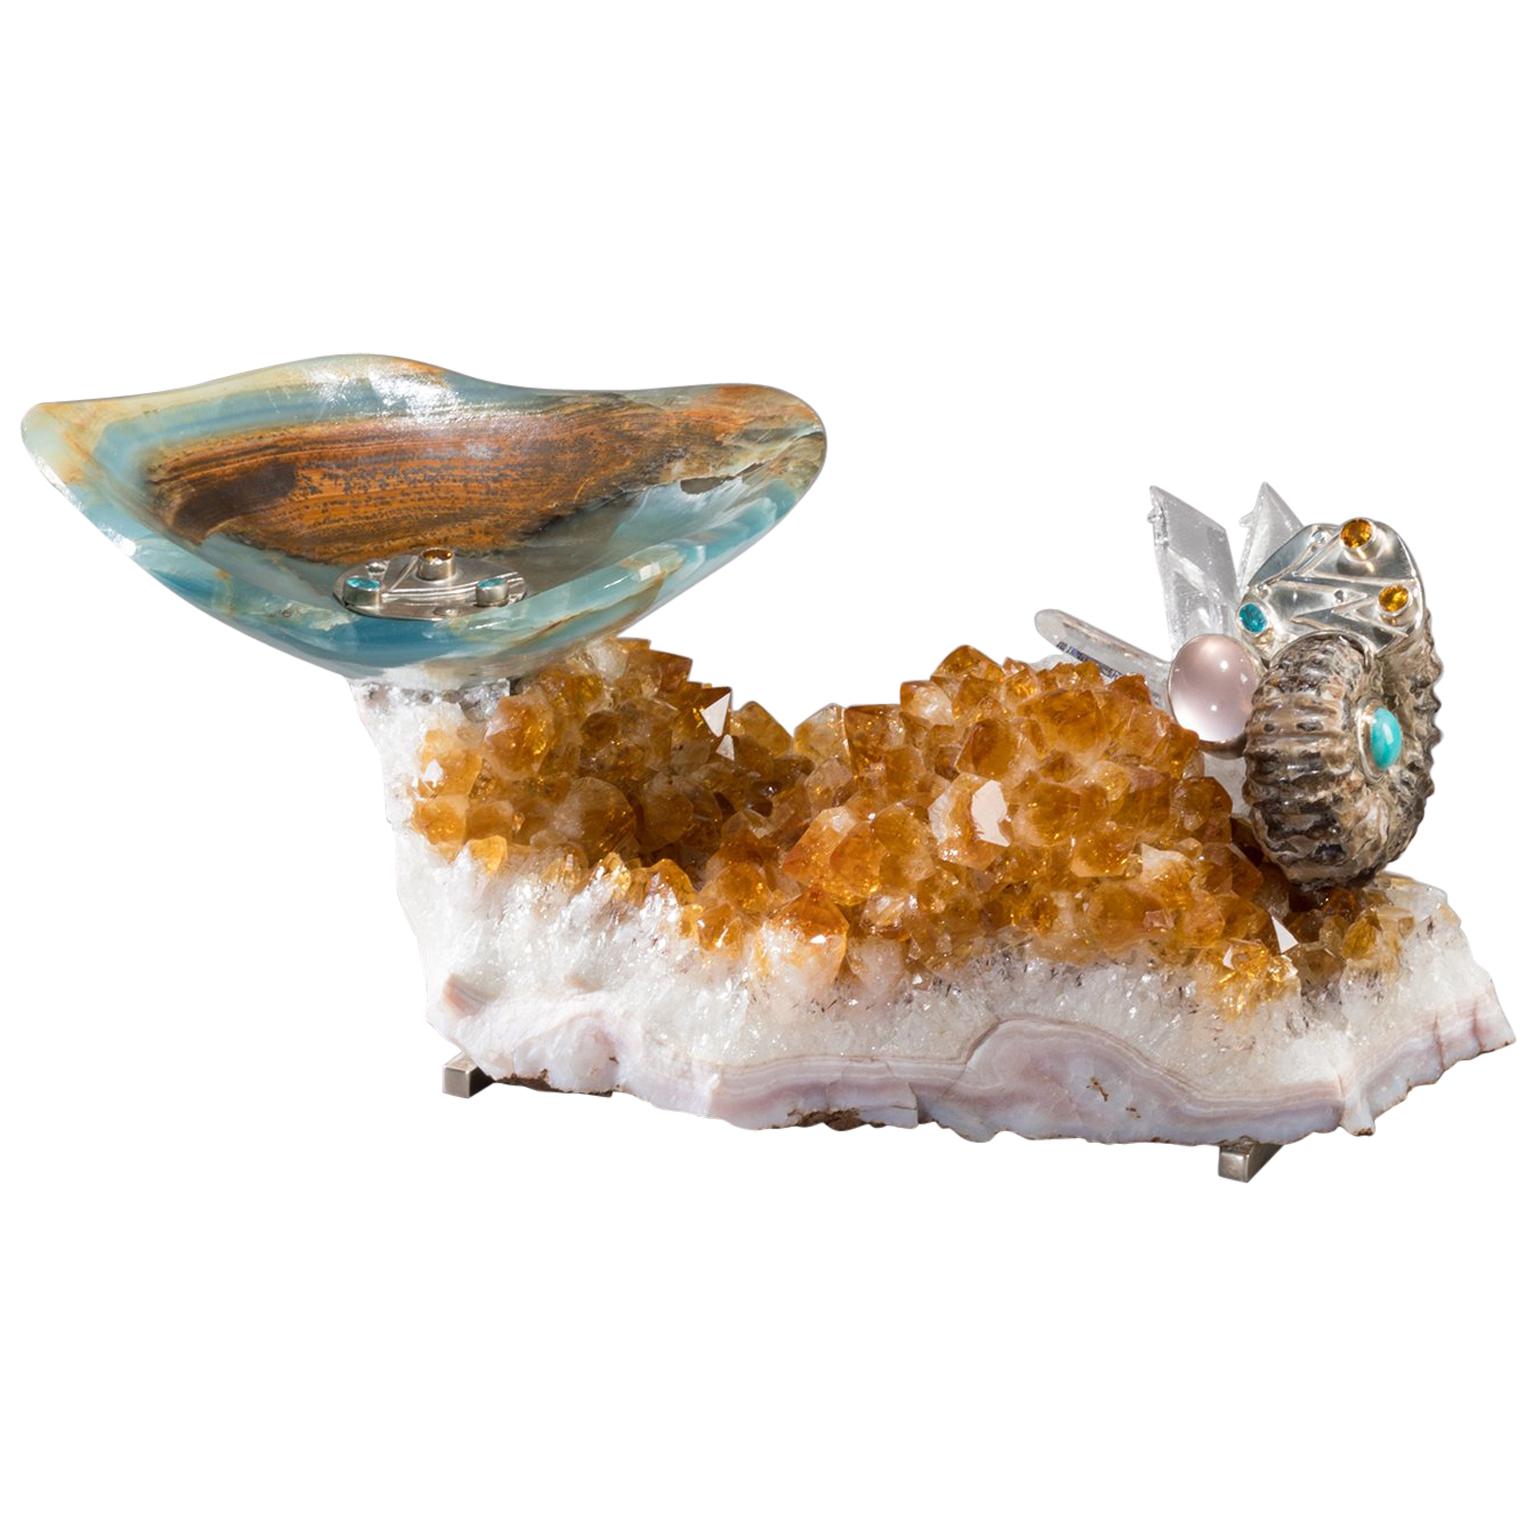 Studio Greytak 'Bling Bowl 5' Rose Quartz, Citrine, Blue Calcite and Ammonite For Sale